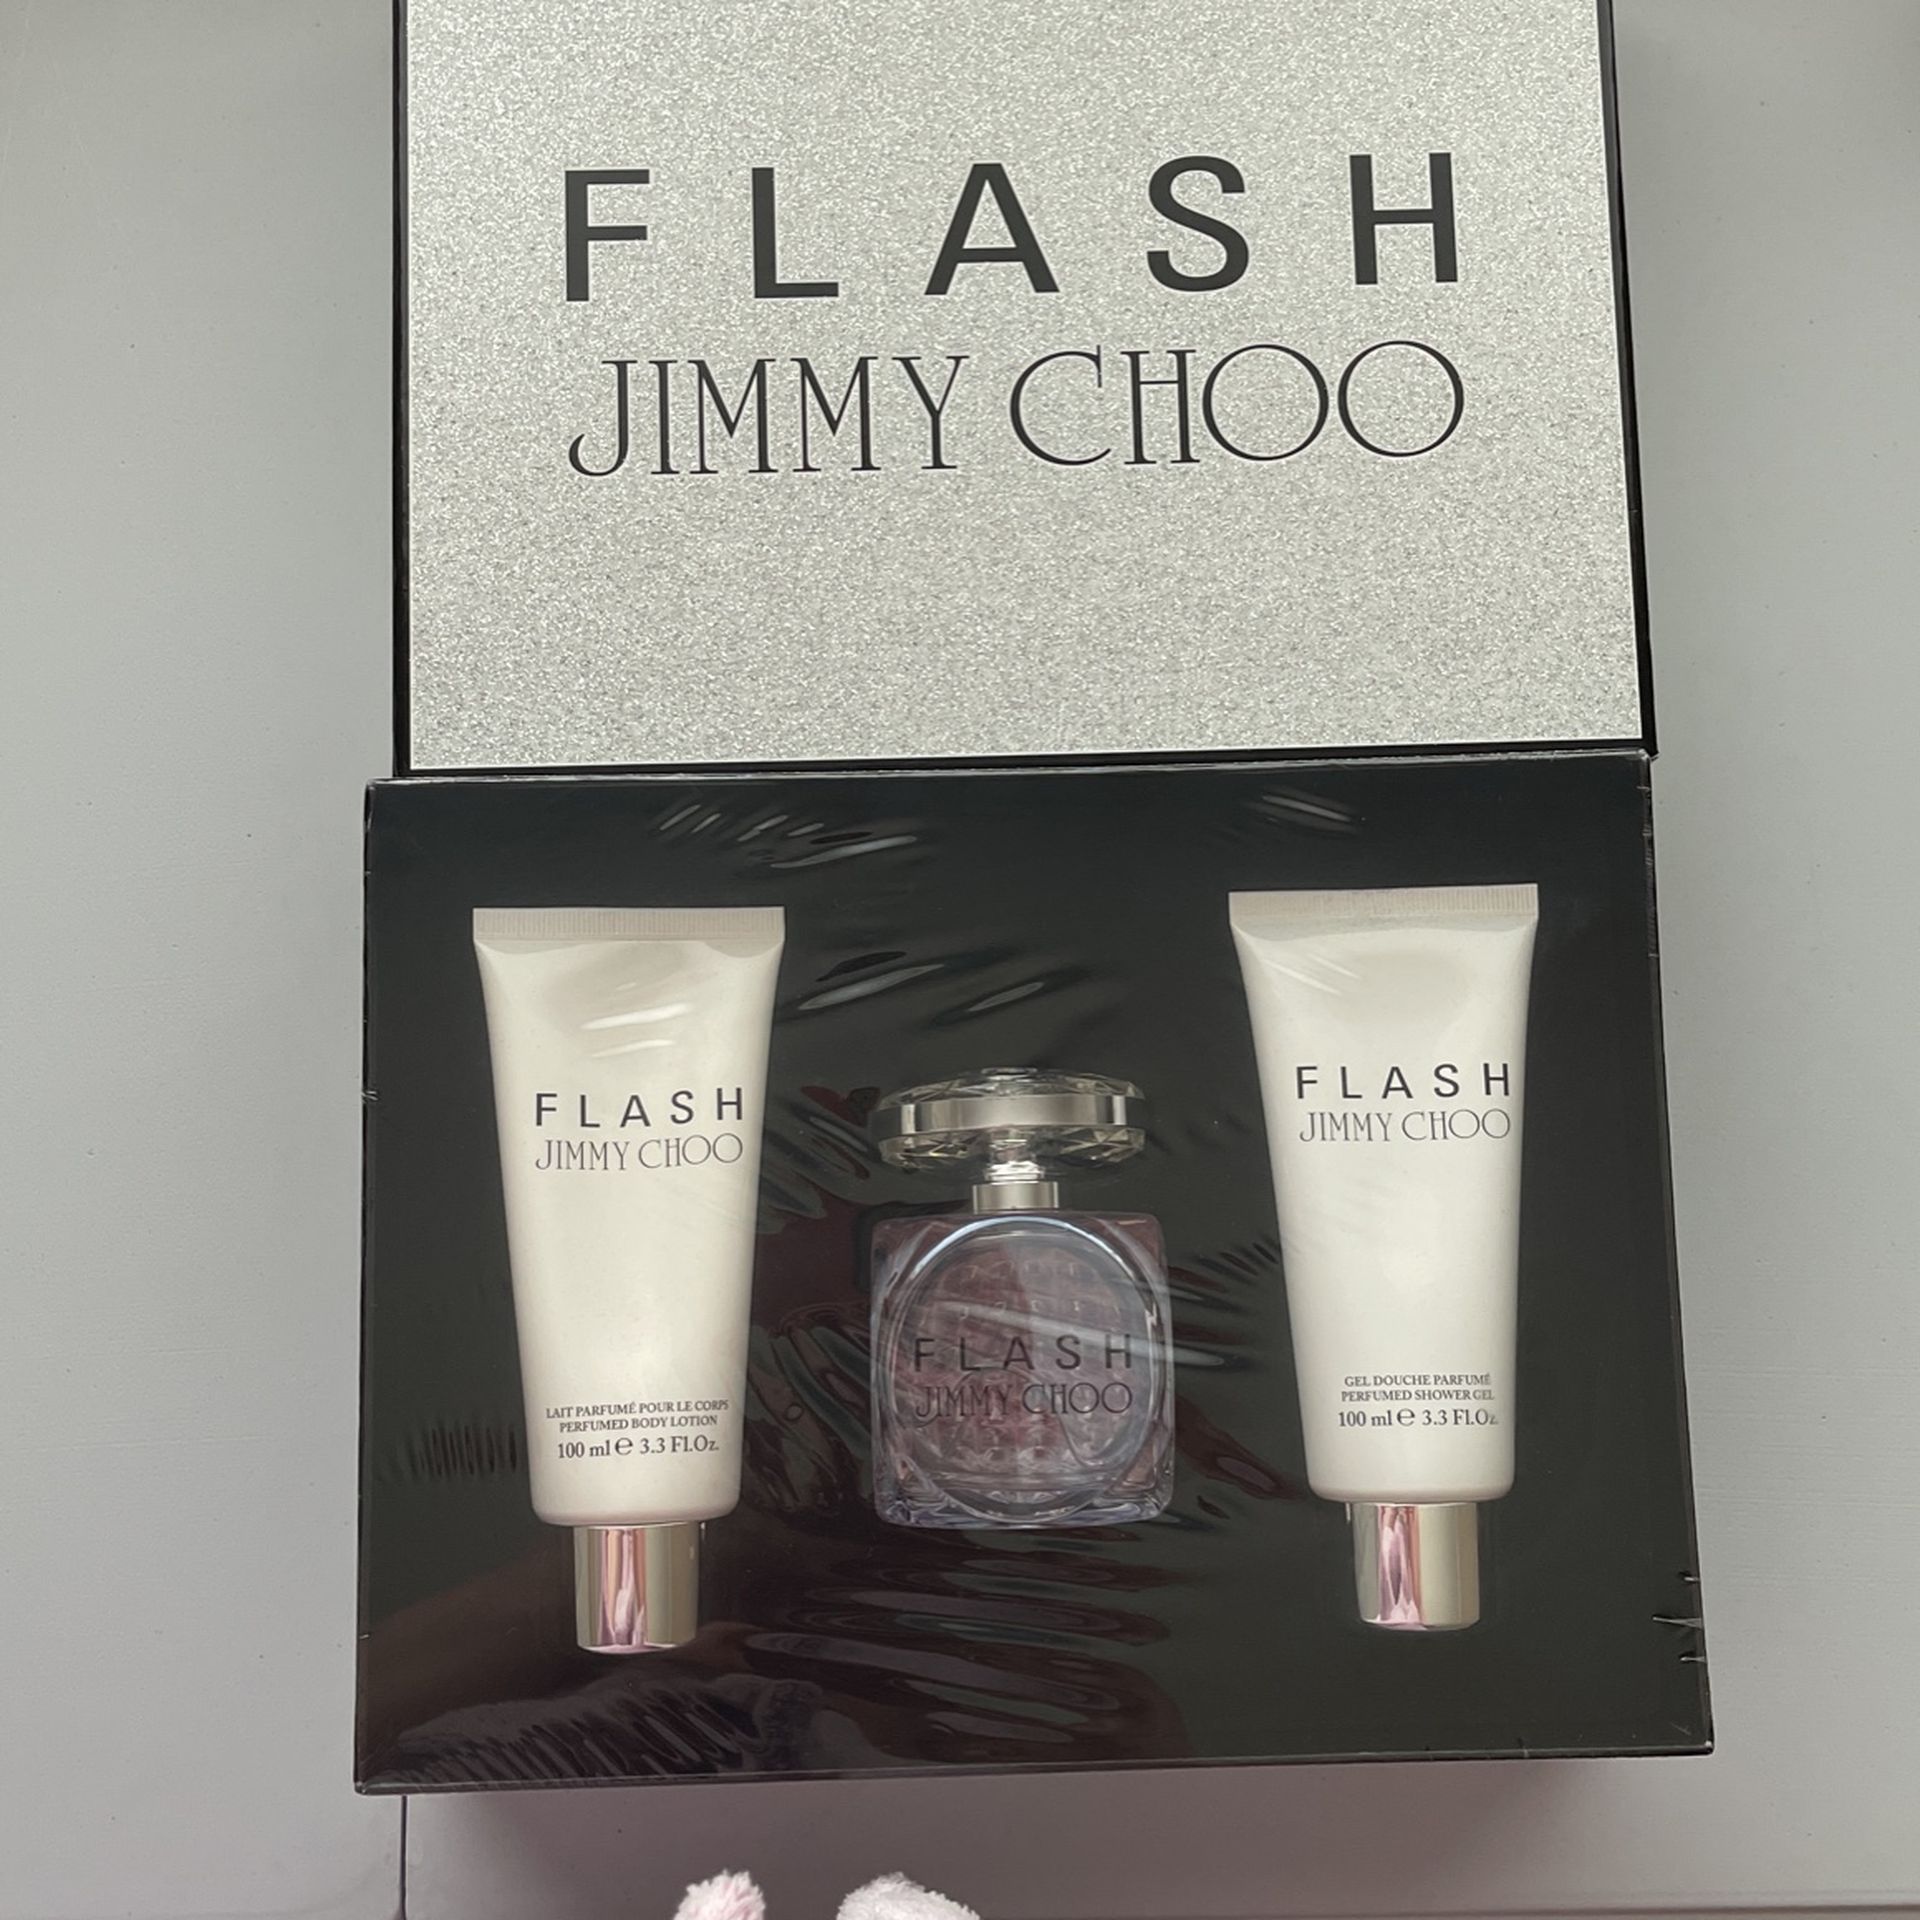 Flash Jimmy Choo